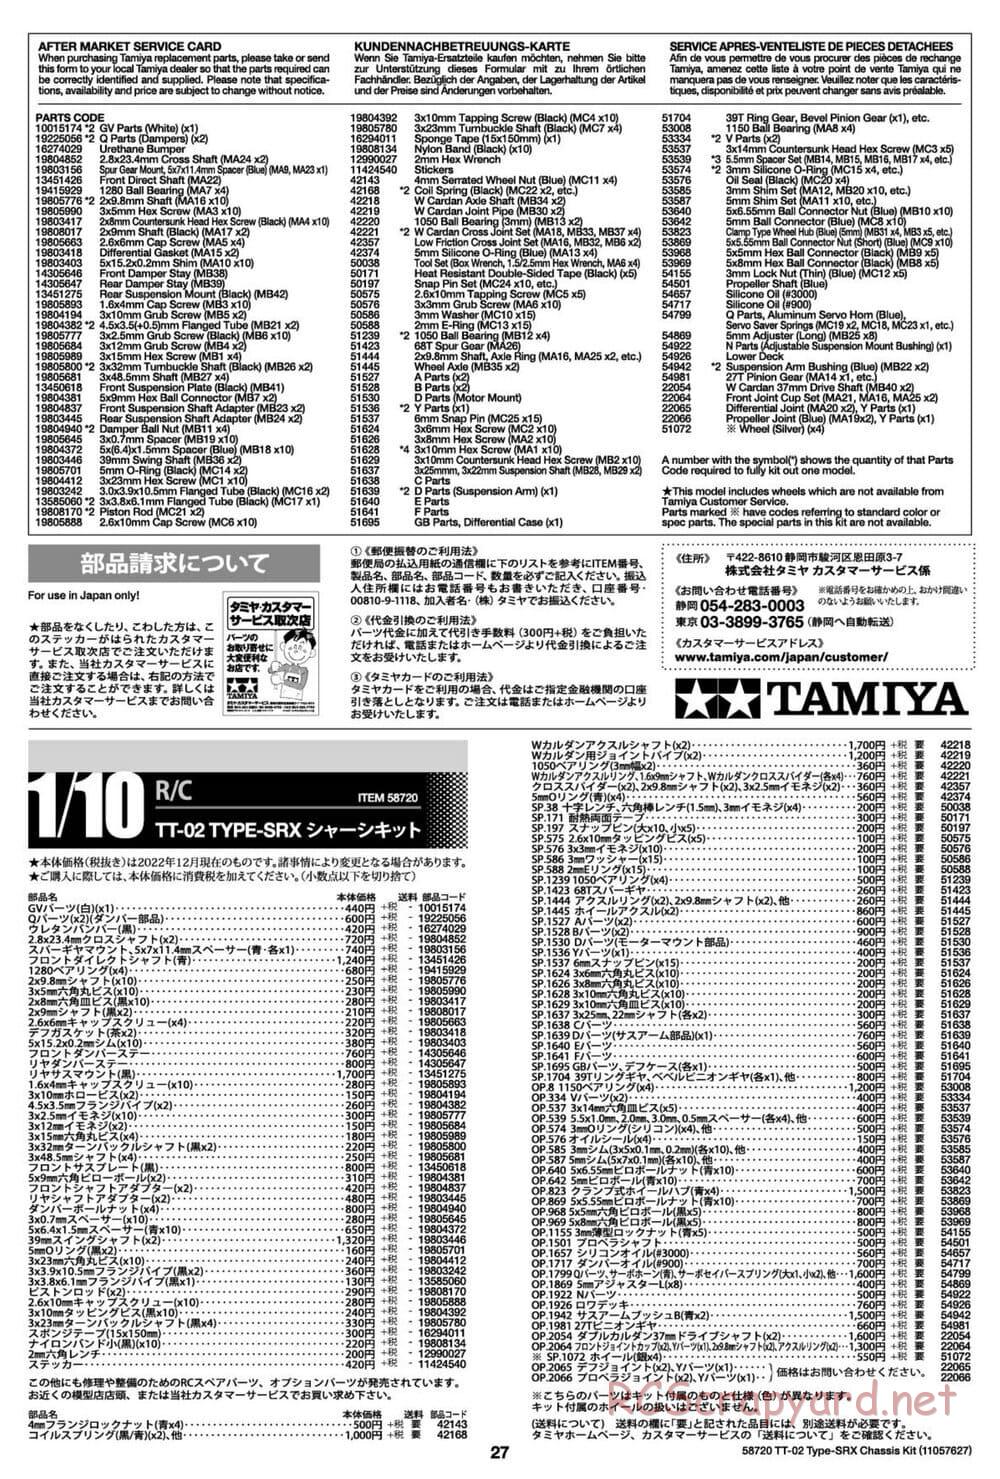 Tamiya - TT-02 Type-SRX Chassis - Manual - Page 27